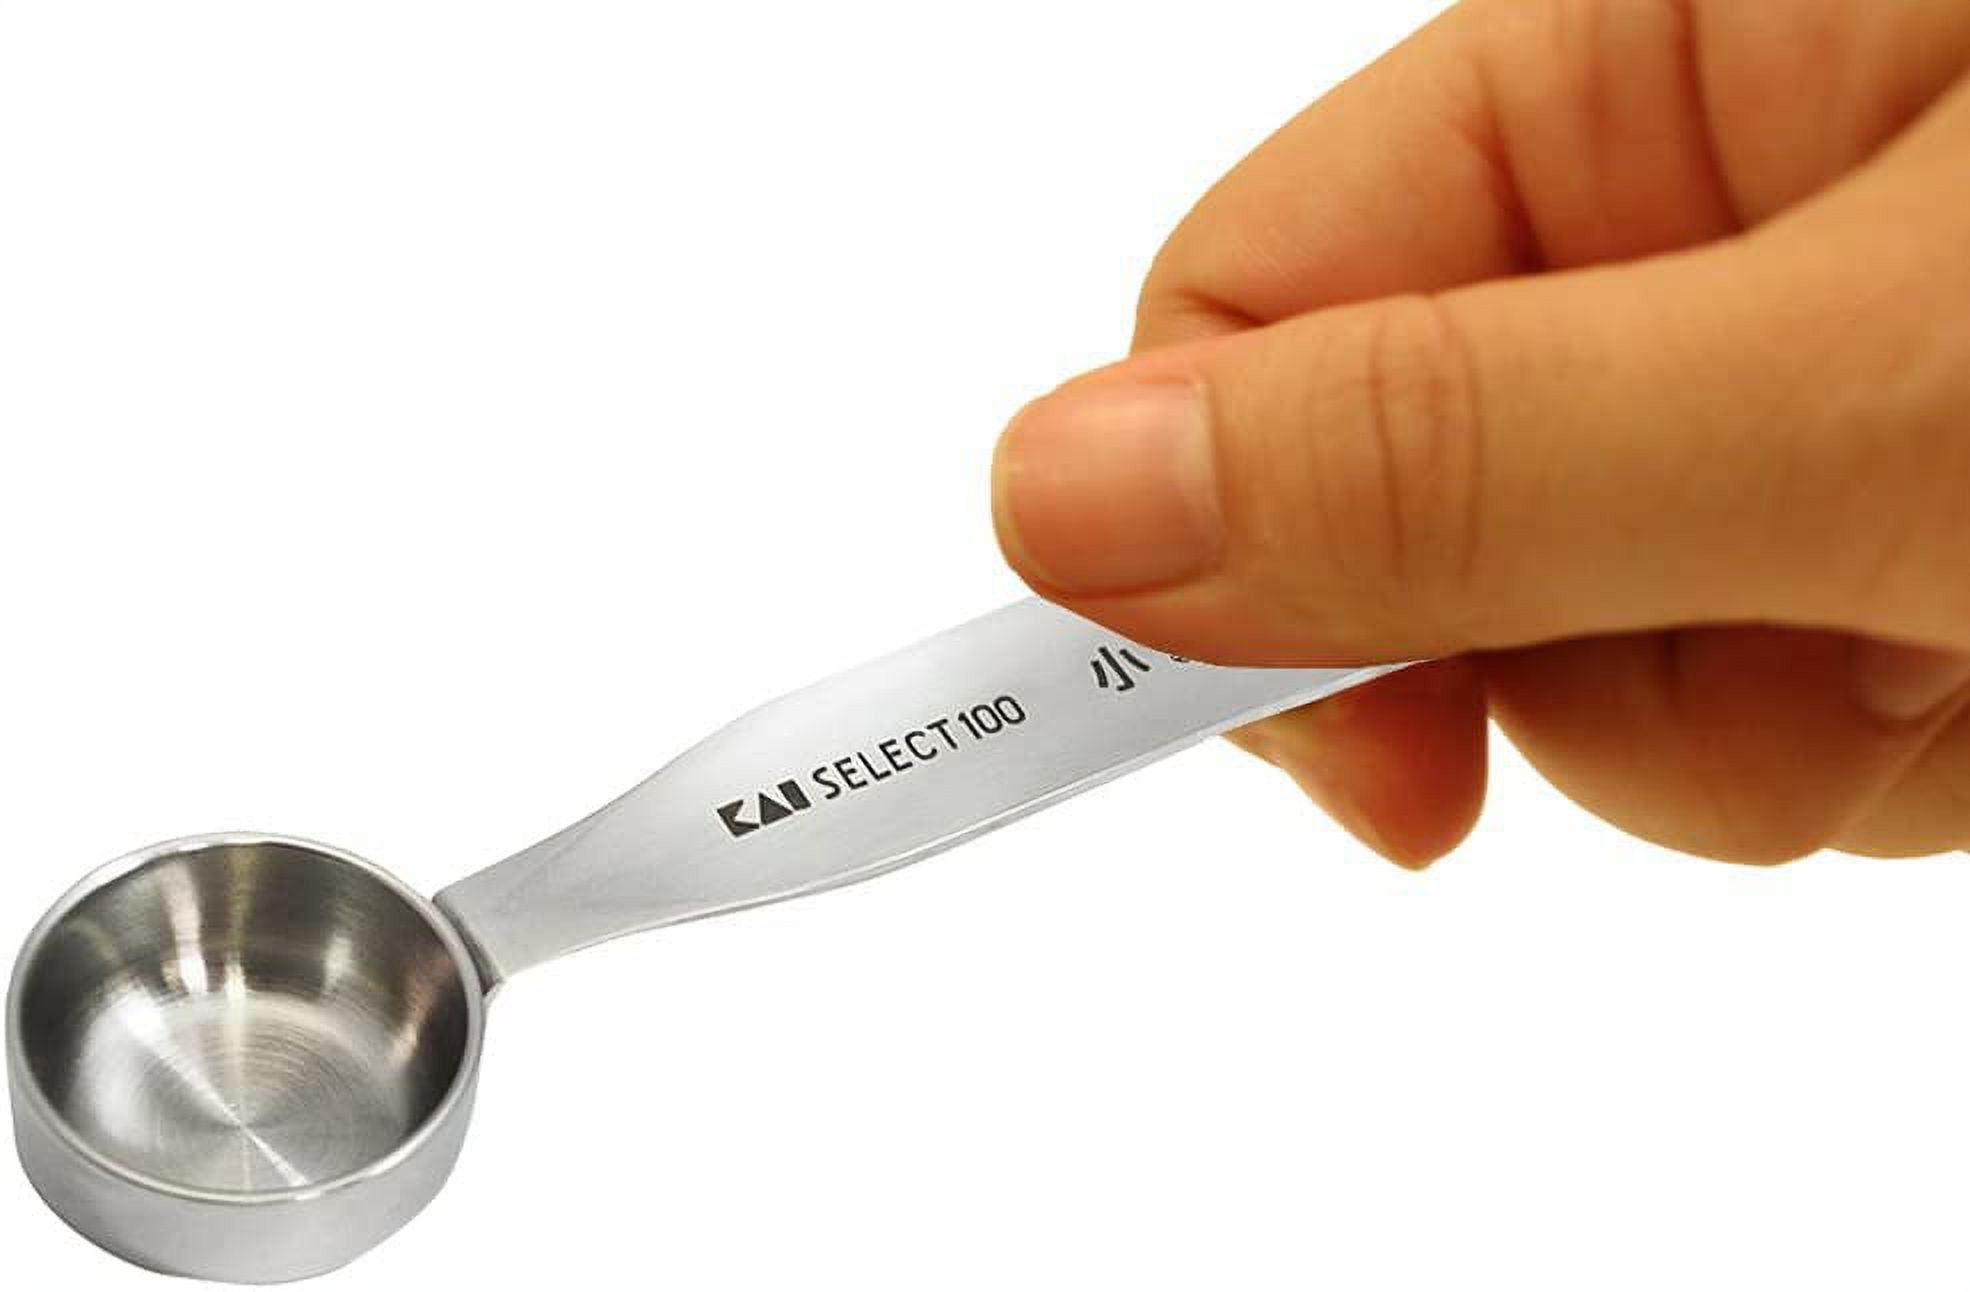 Measuring Spoon ( 1/2 Teaspoon ) – KT03122-0.5 – Vimmax